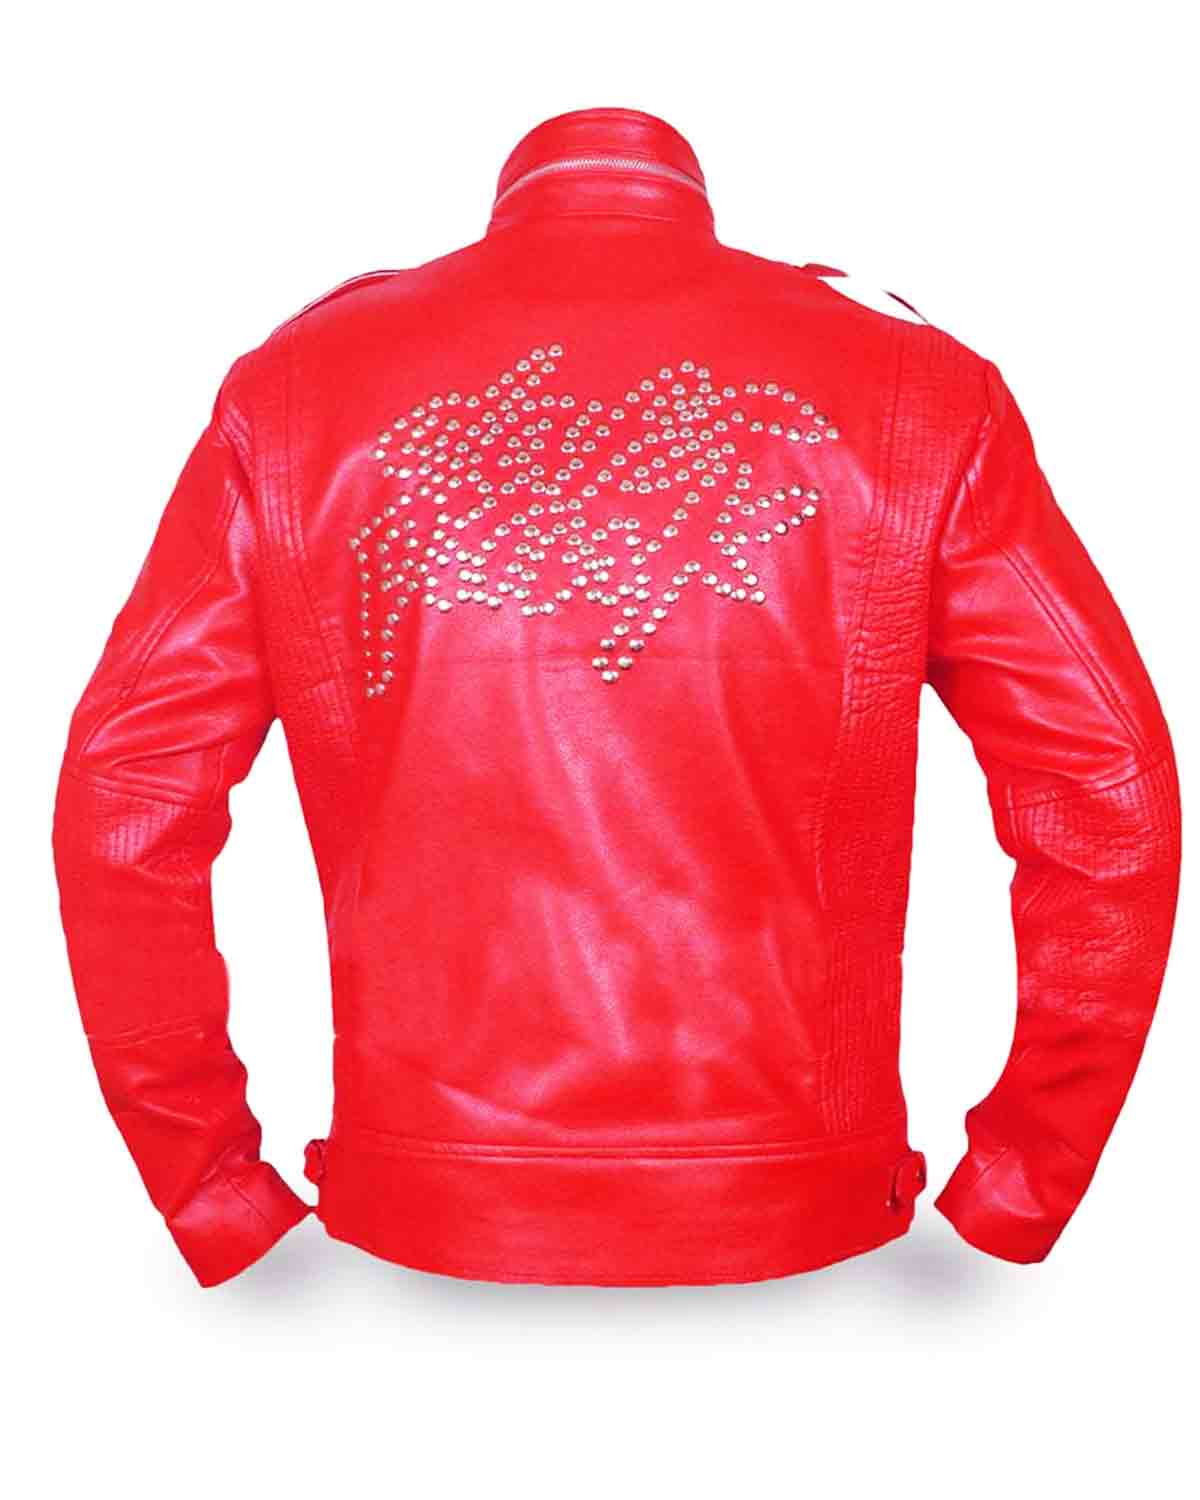 Elite Daft Punk Red Leather Jacket